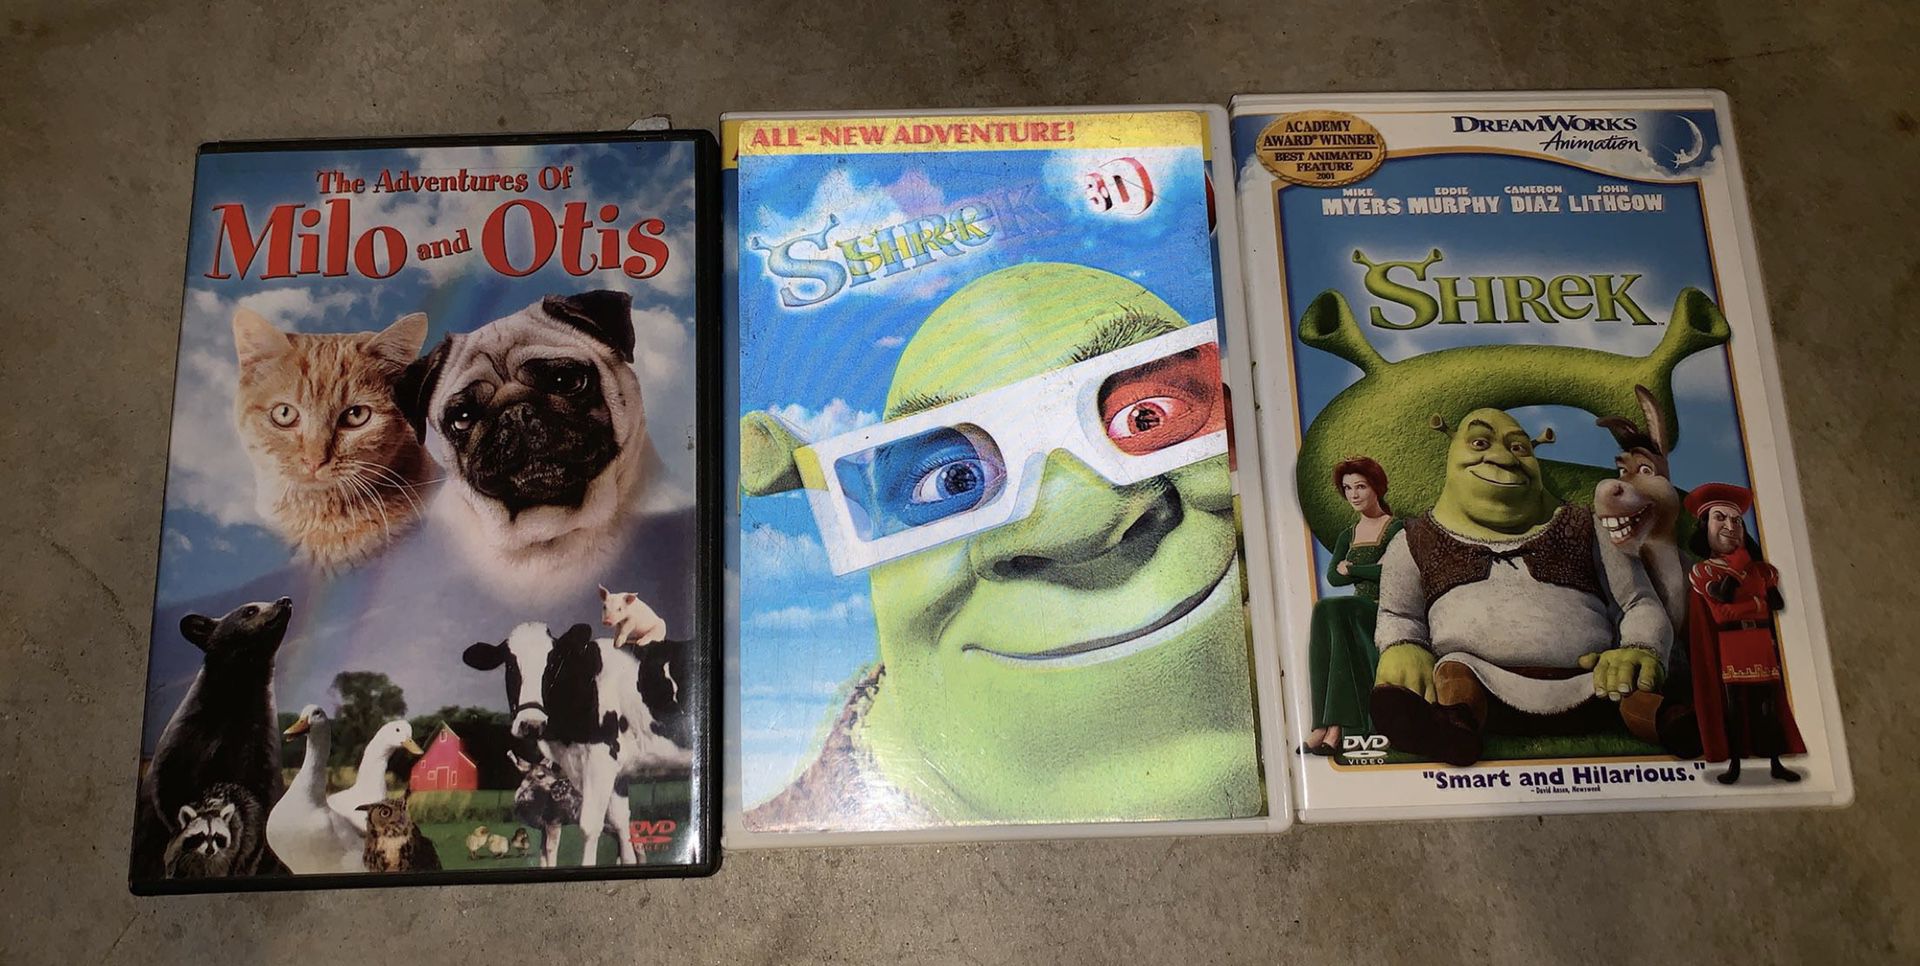 Shrek and milo and Otis movies